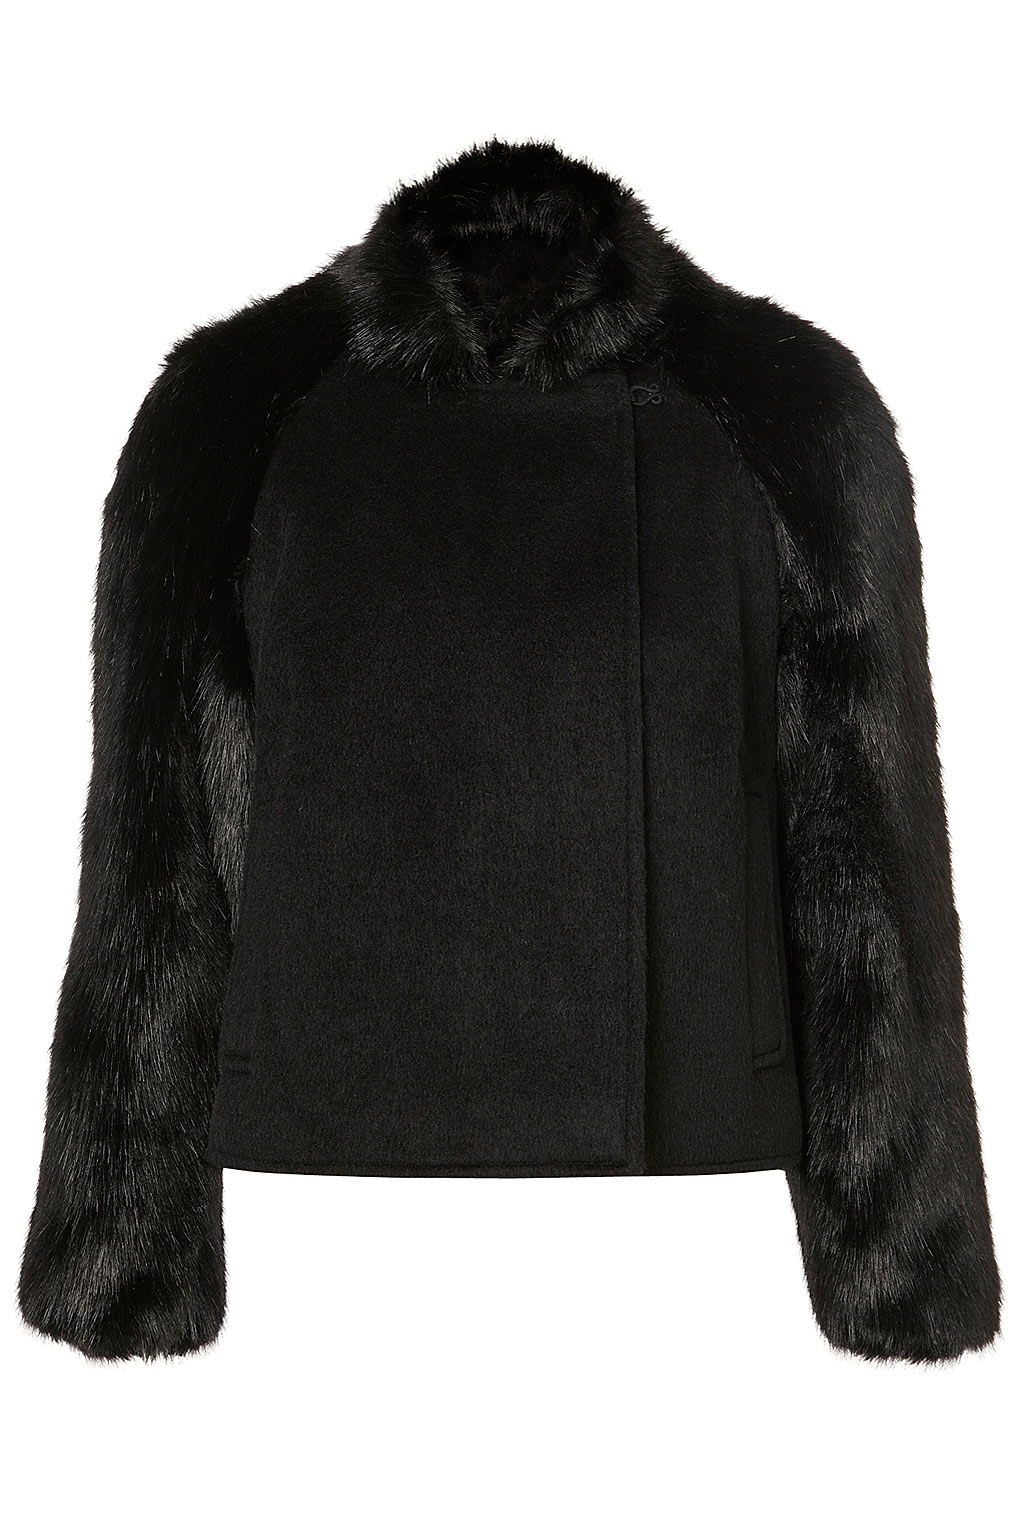 Topshop Cropped Faux Fur Sleeve Coat in Black | Lyst